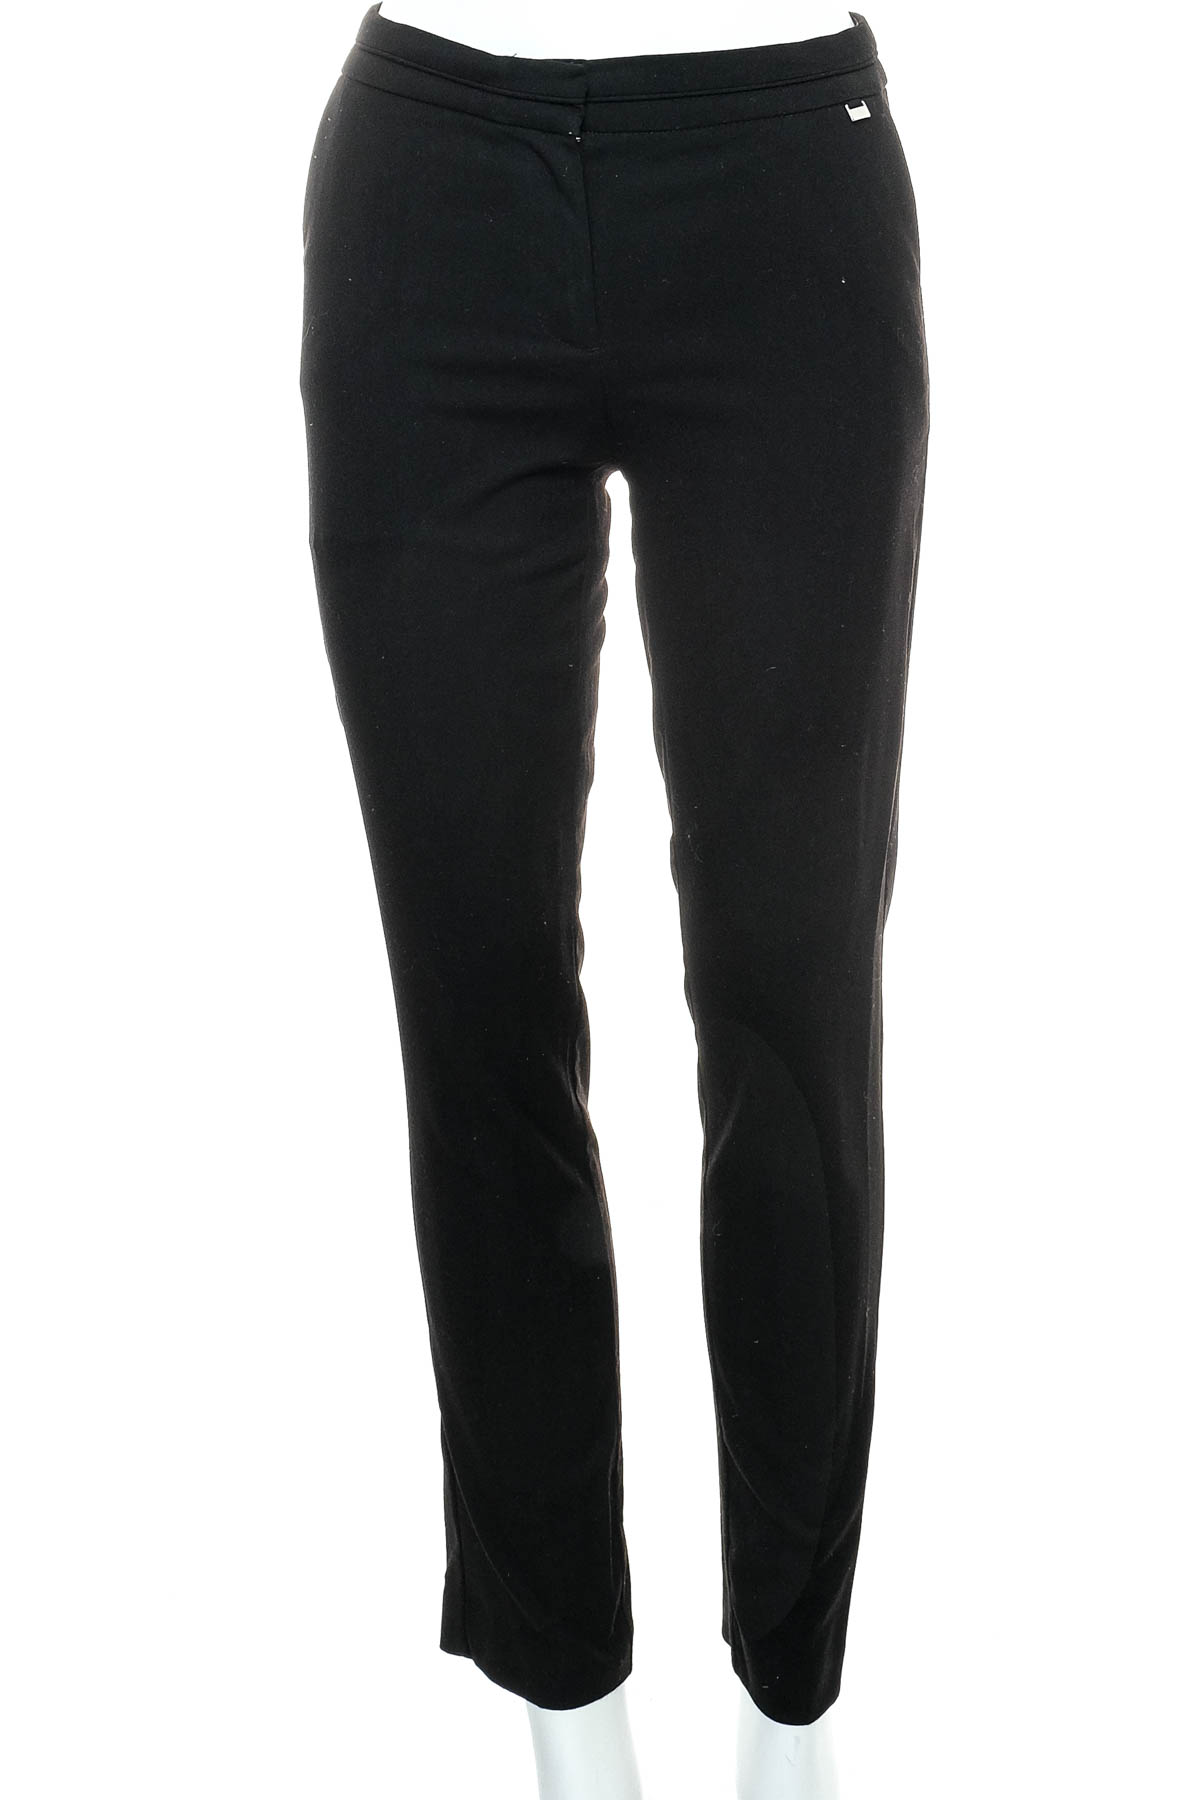 Women's trousers - Orsay - 0